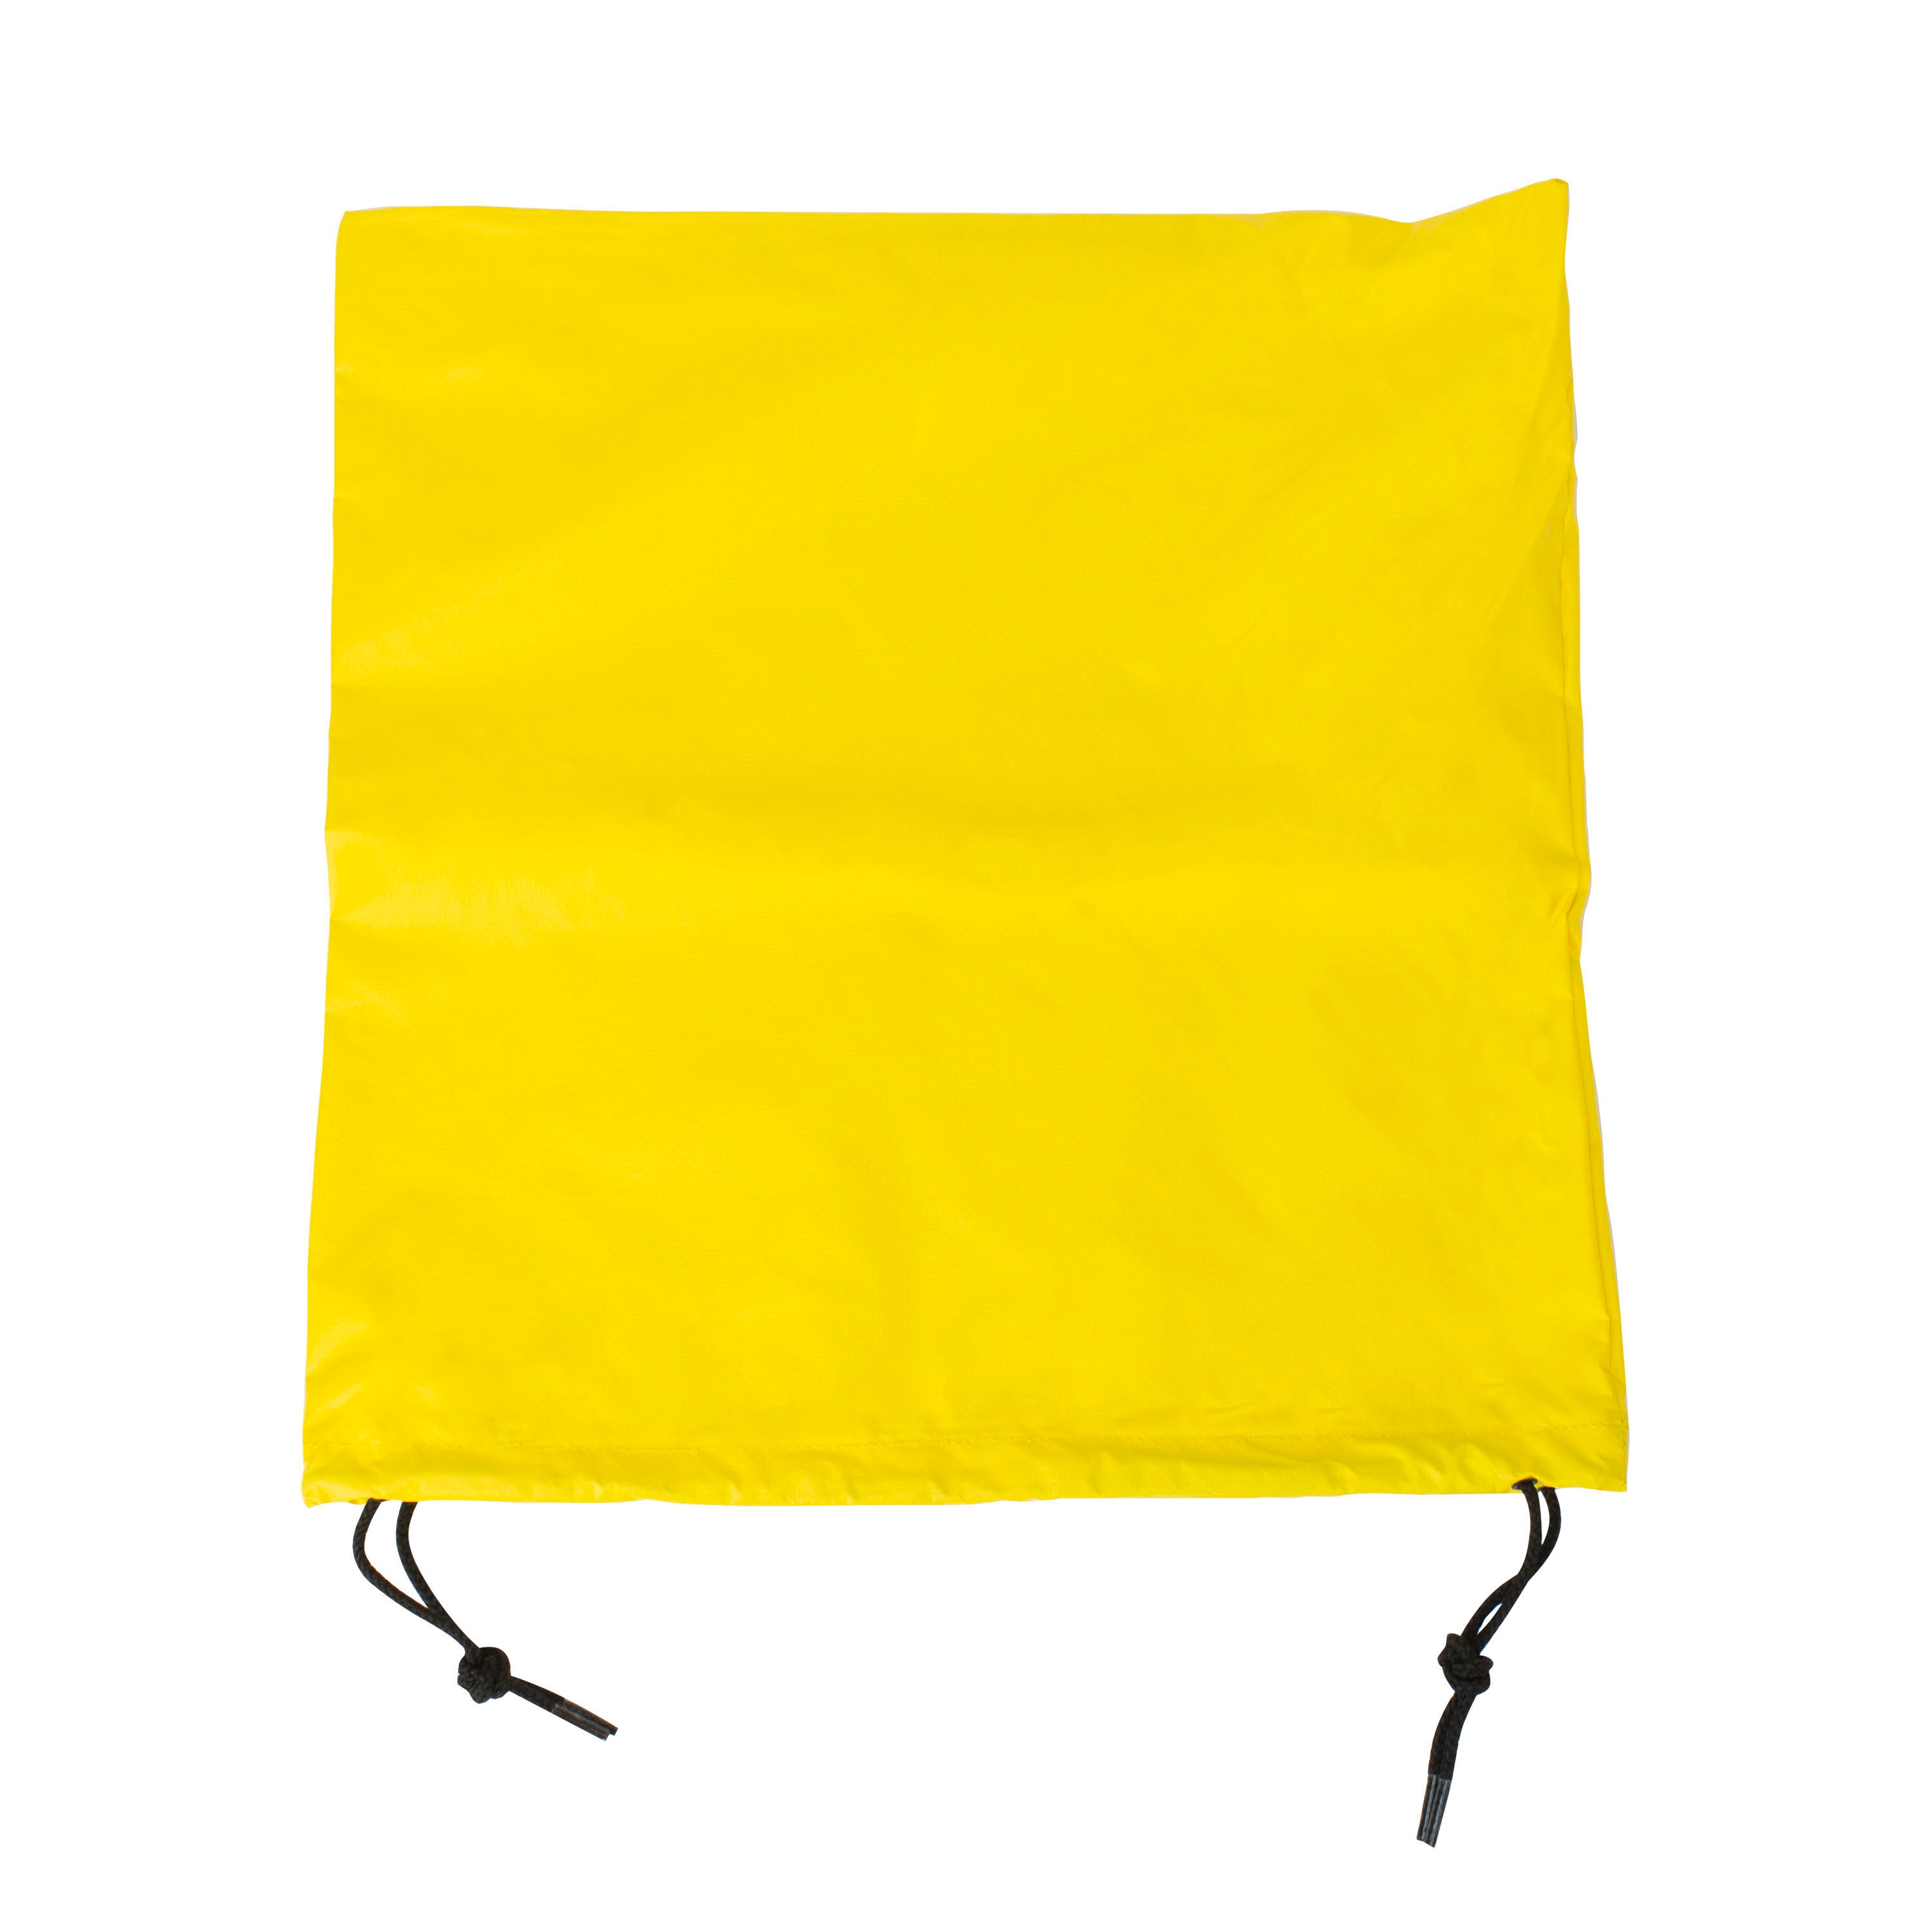 Neese 35BG Universal Bag - Safety Yellow - Size U-eSafety Supplies, Inc